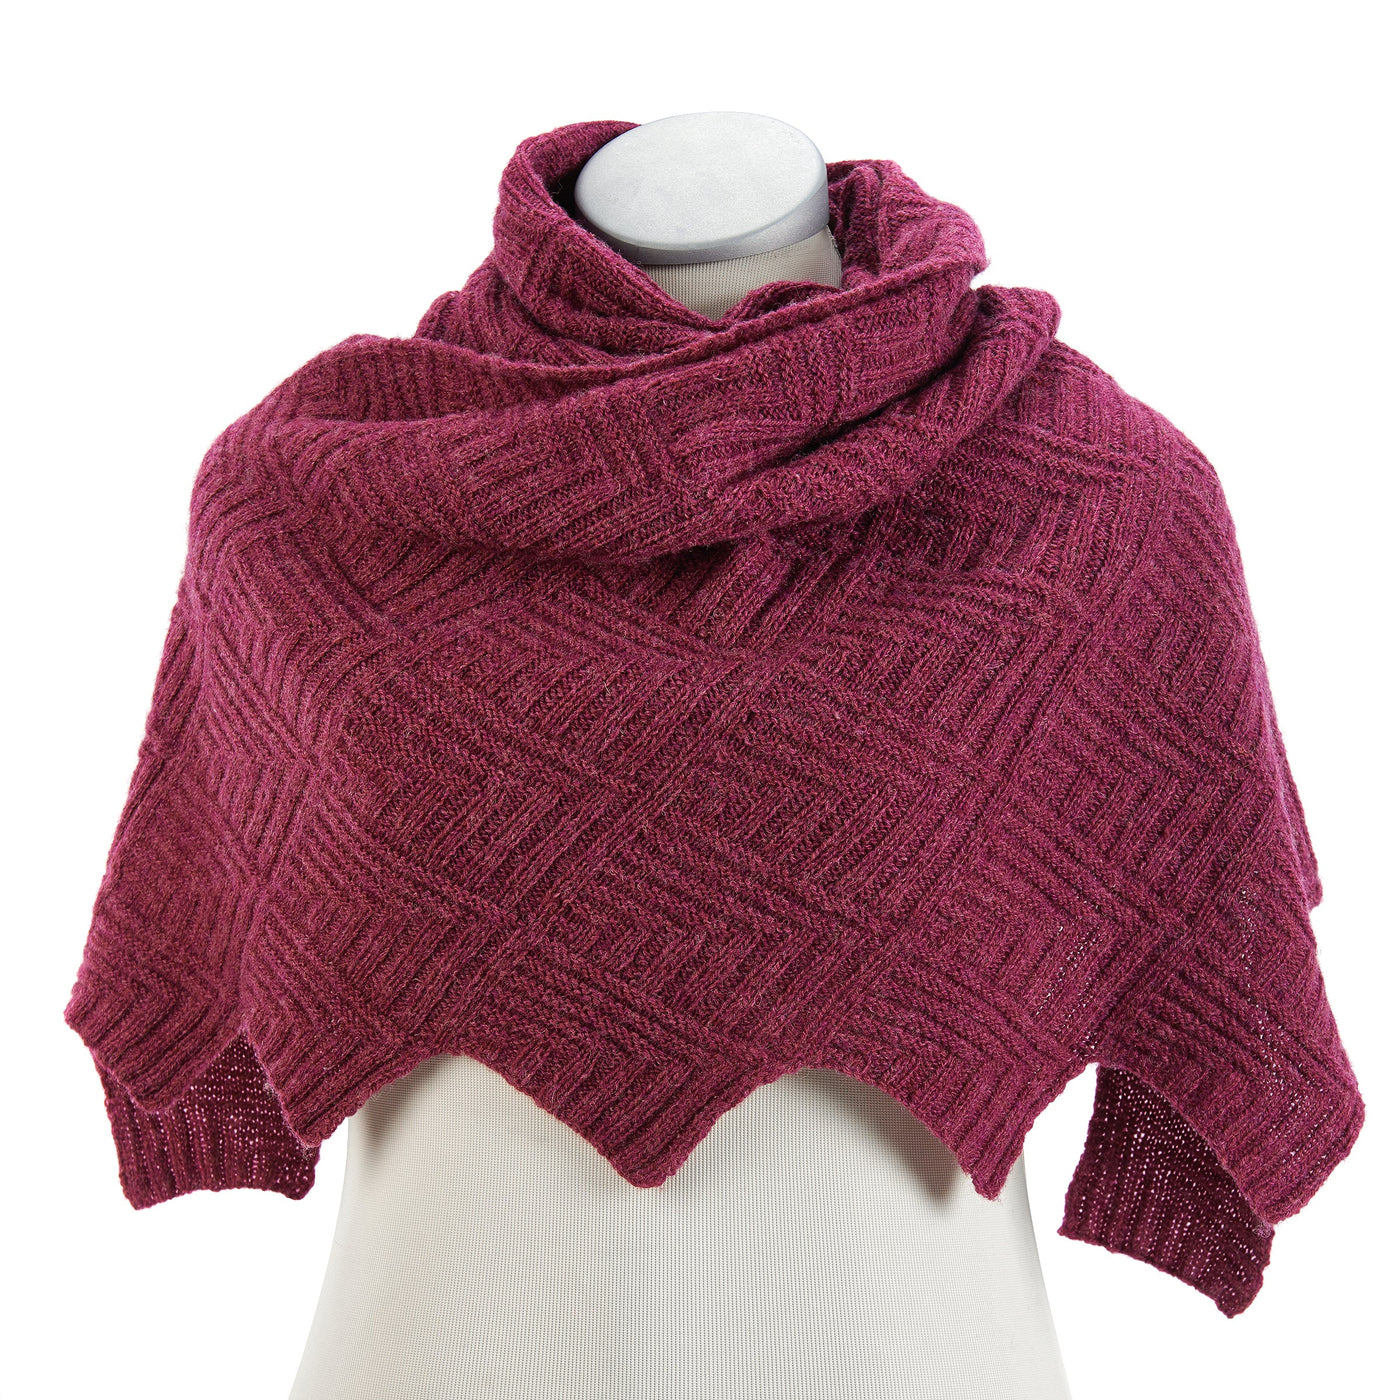 Knitted - Knit shawl our beautiful shawl patterns and kits – Geilsk